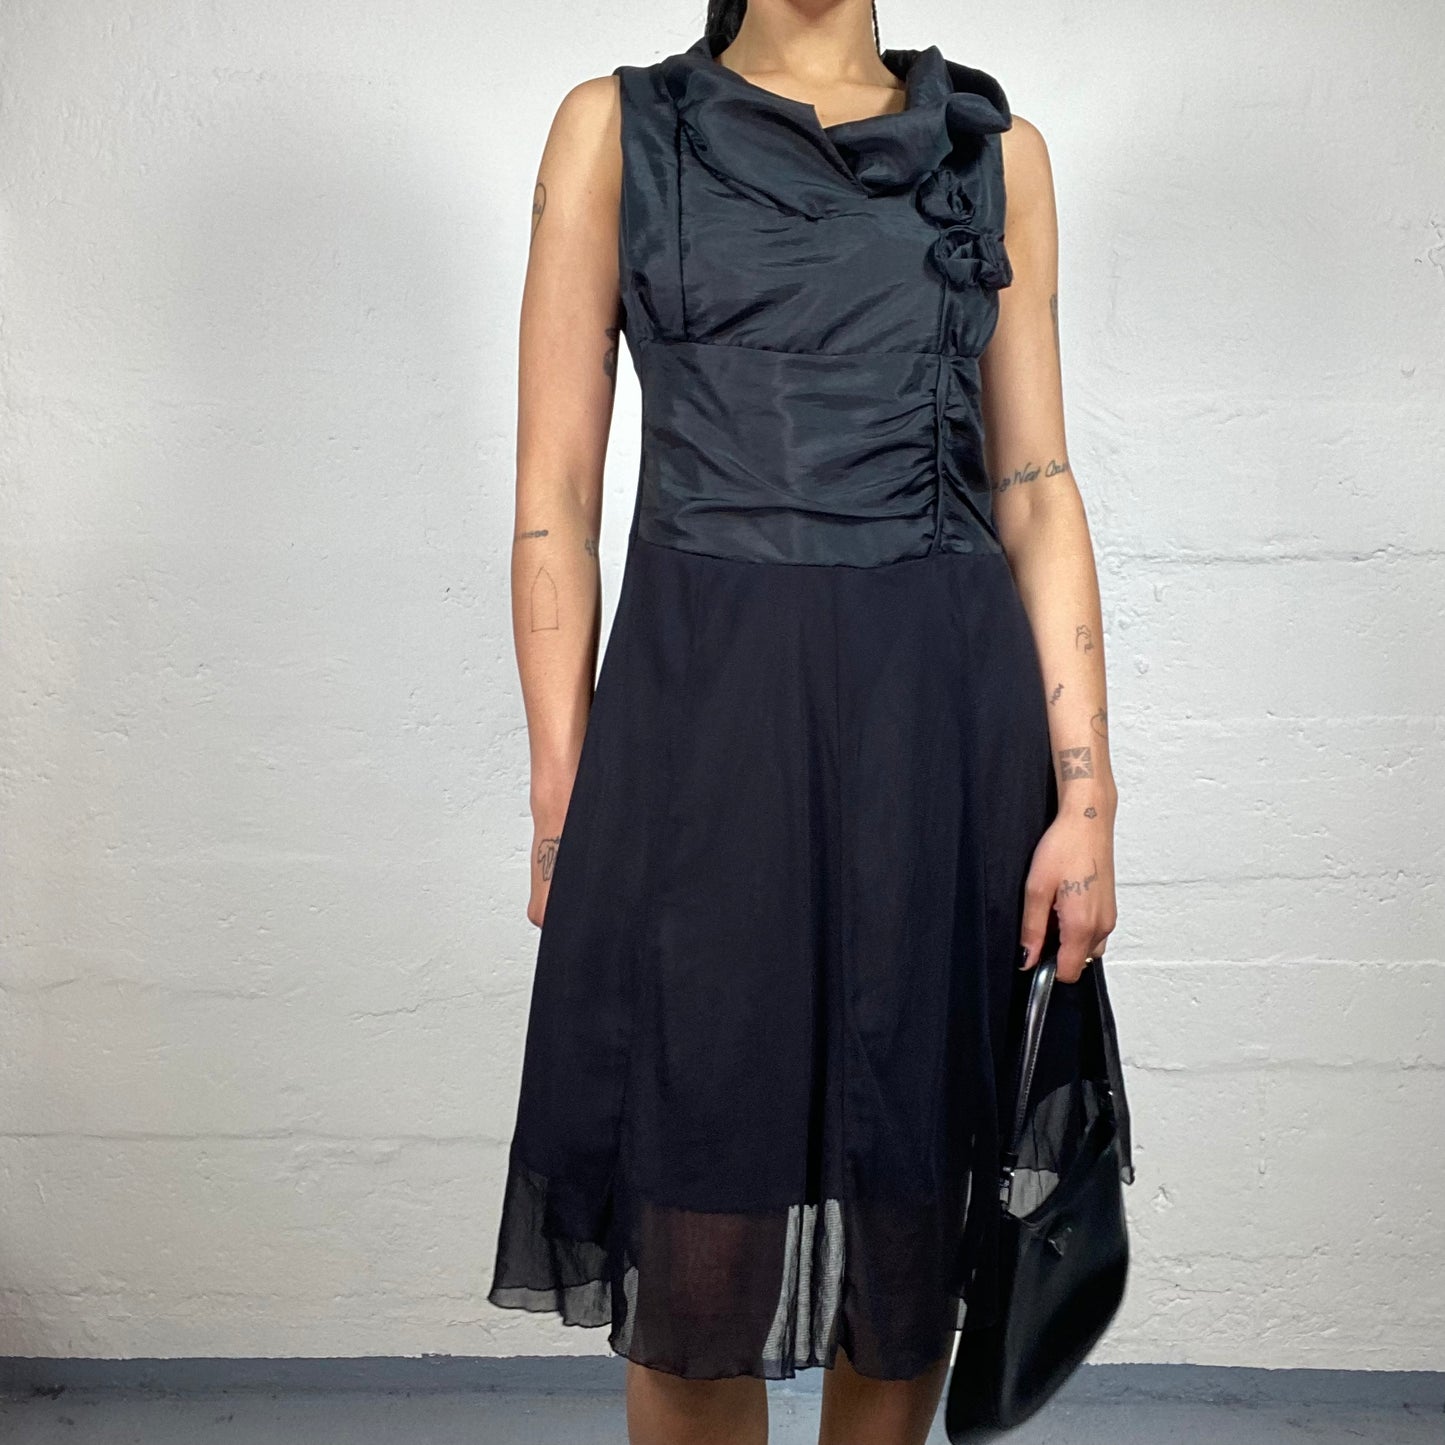 Vintage 2000's Glamorous Black Nylon Top Roses Embroidery and Chiffon Skirt Dress (M)